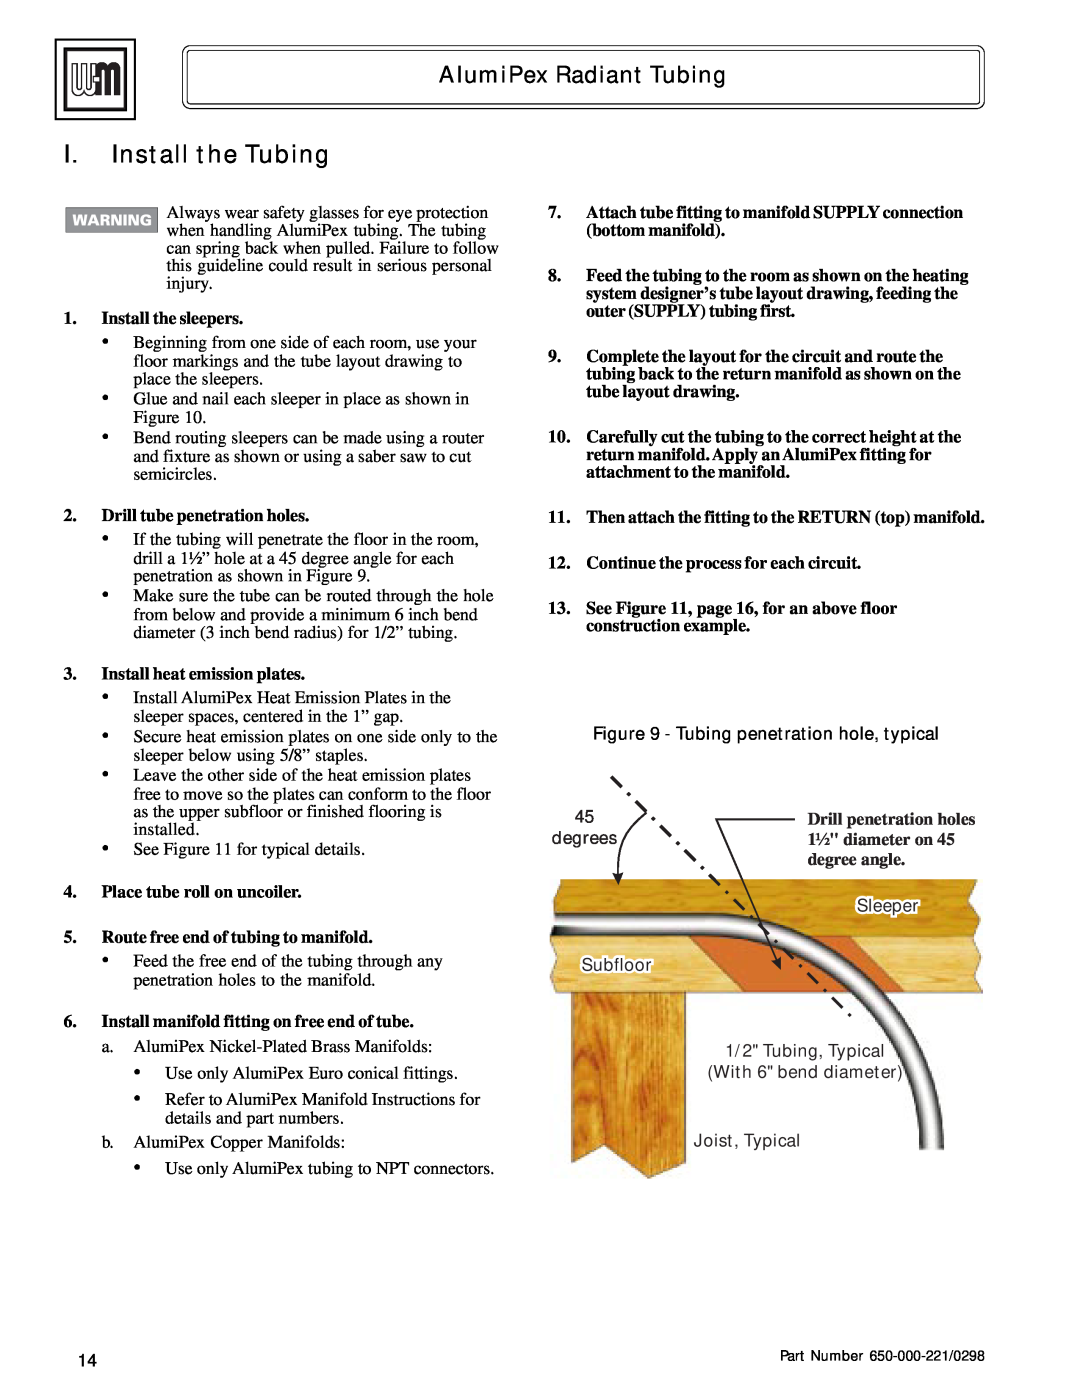 Weil-McLain Radiant Heater manual I.Install the Tubing, AlumiPex Radiant Tubing 